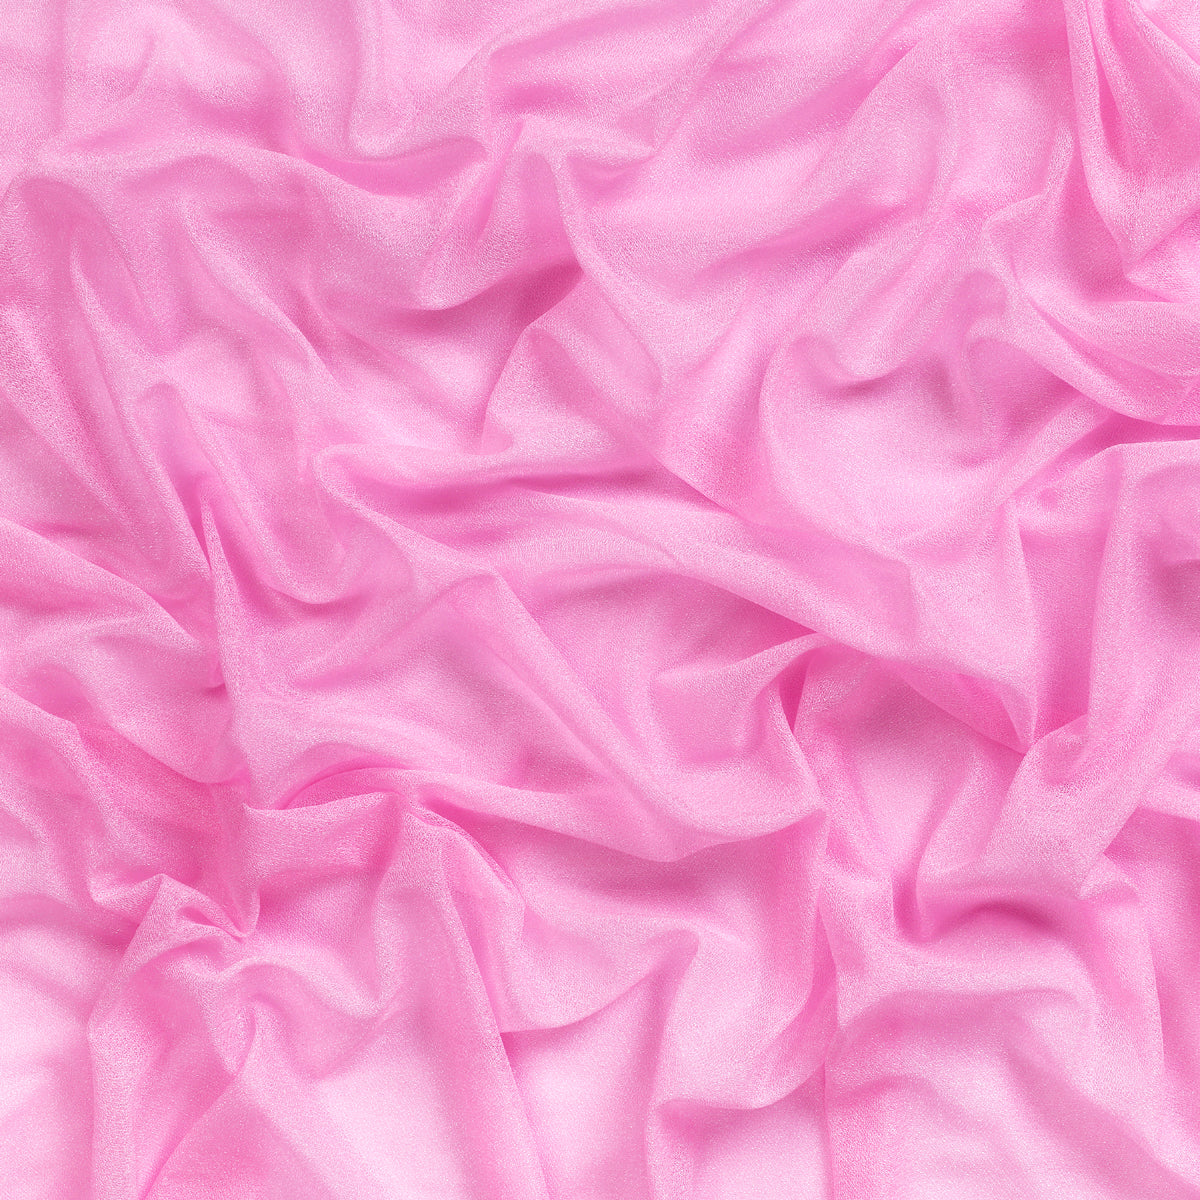 Bubblegum Pink,e1e830fe-5e2f-4087-b65d-59480d5003c1